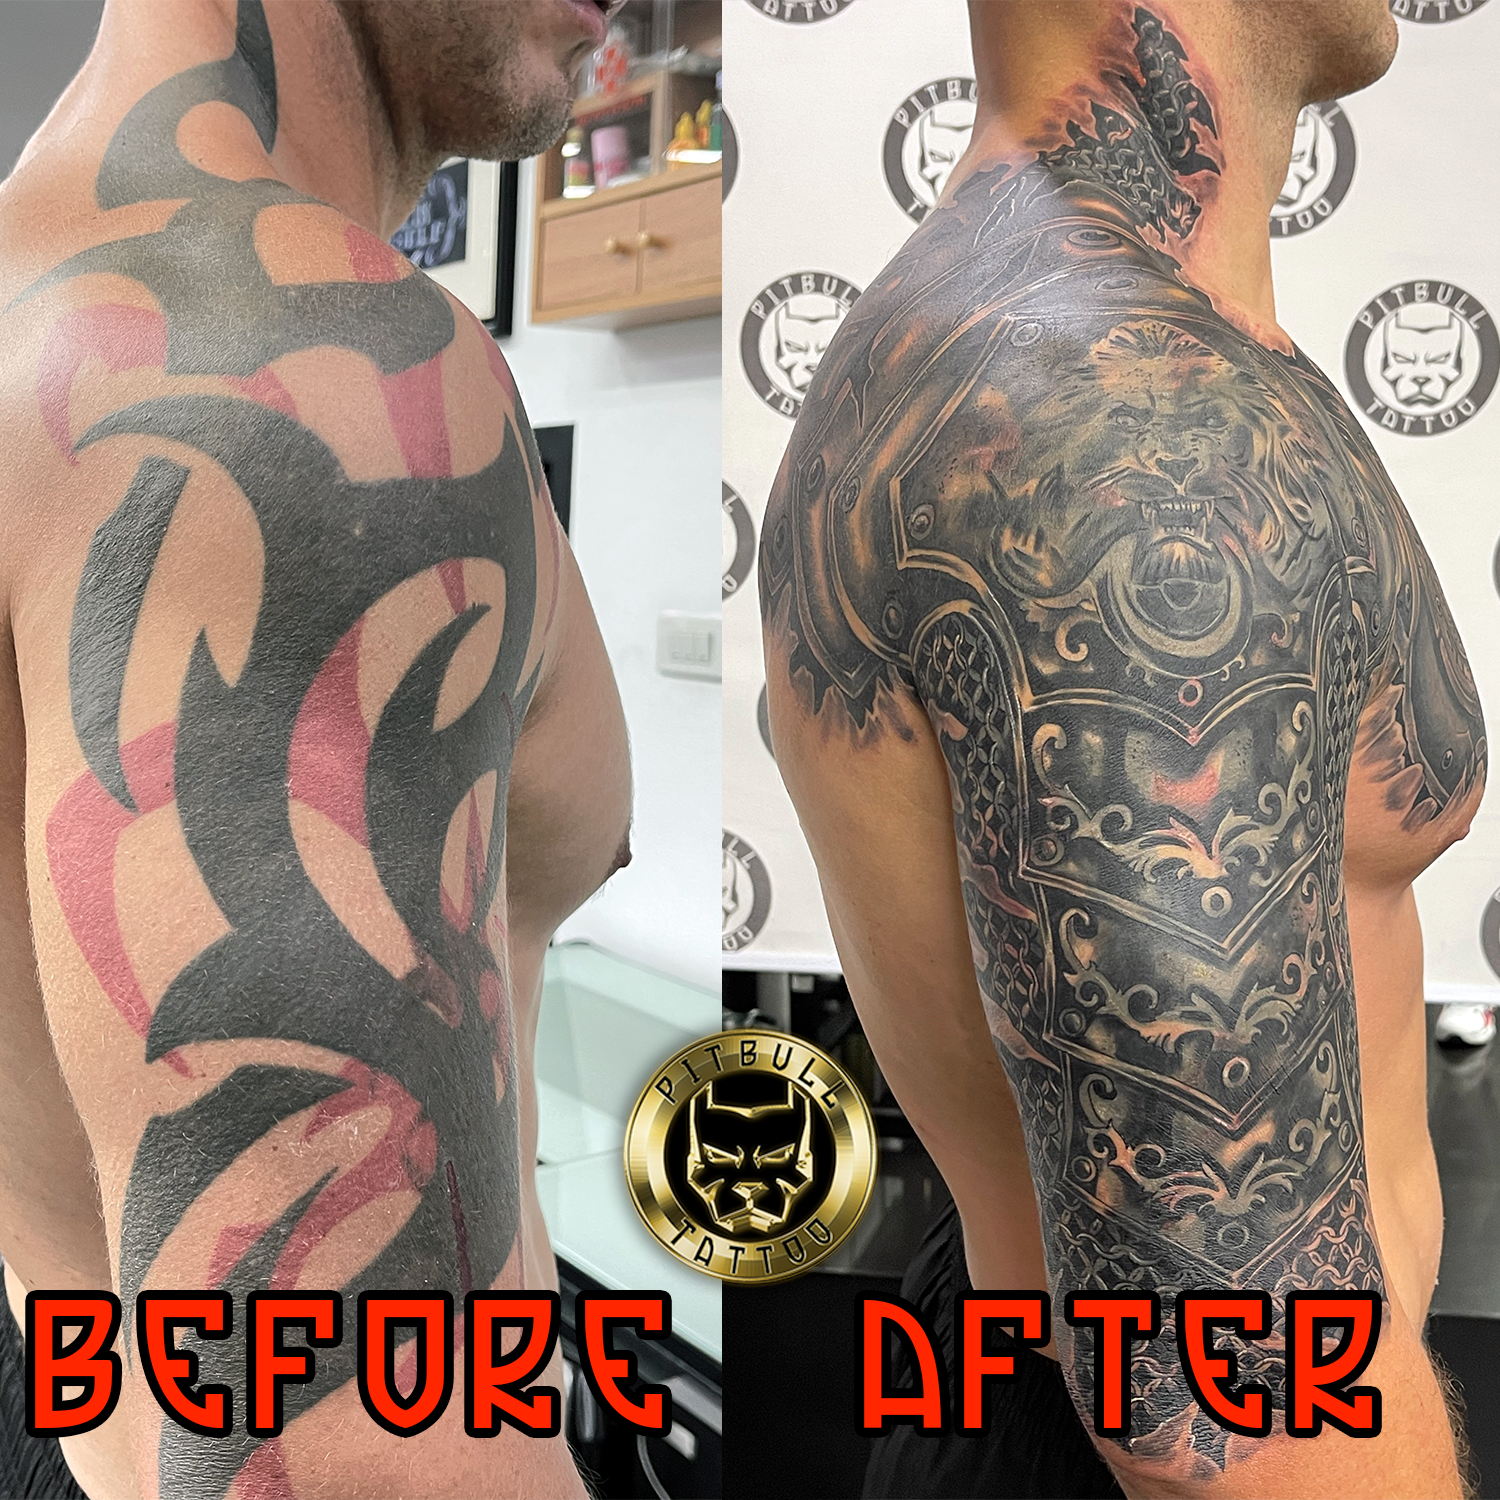 Cover Up Tattoo Specializations at Pitbull Tattoo